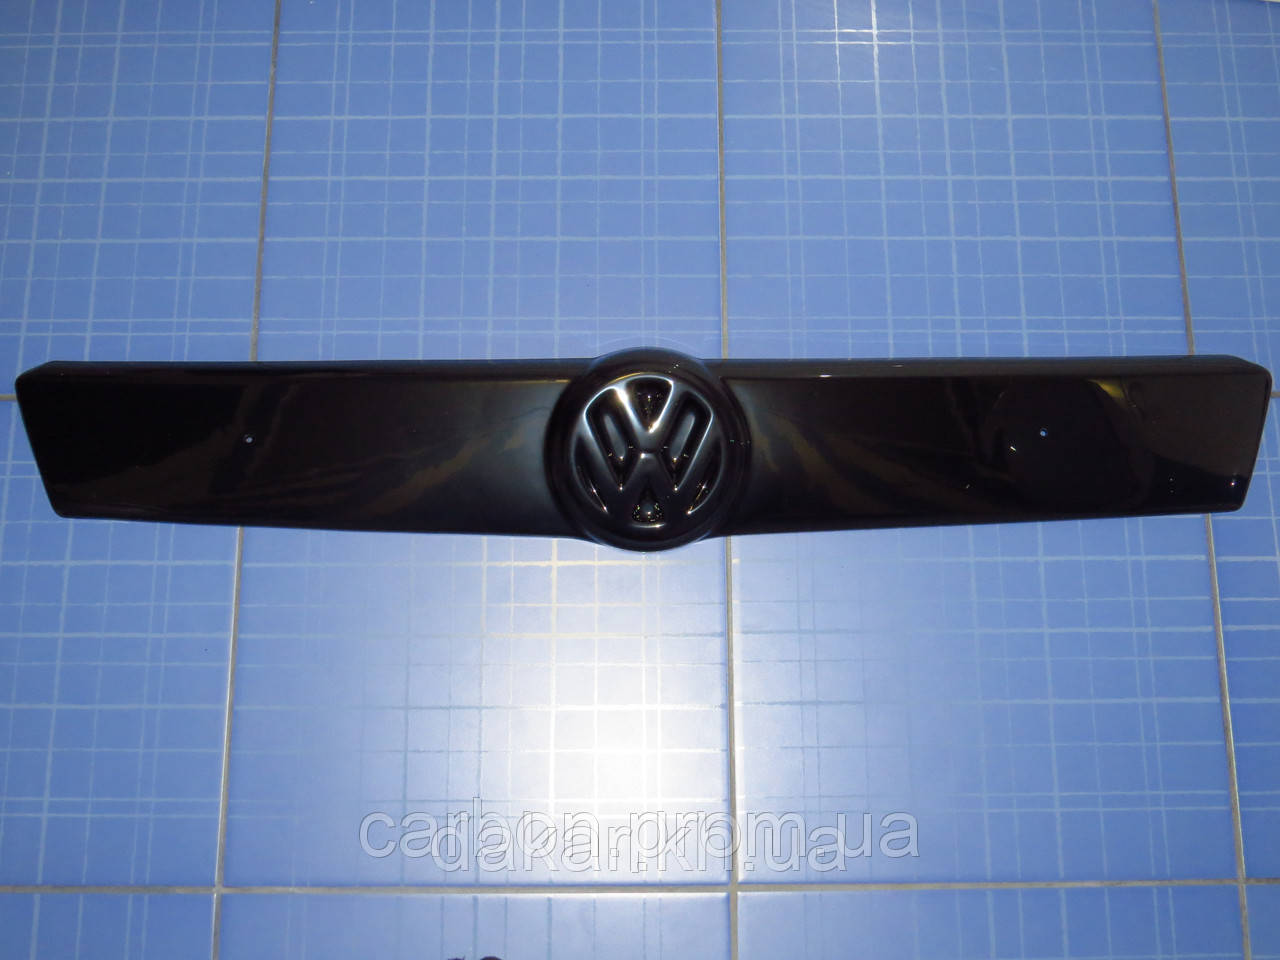 Заглушка решётки радиатора Volkswagen T4 верх 1999-2003 глянец Fly. Ут